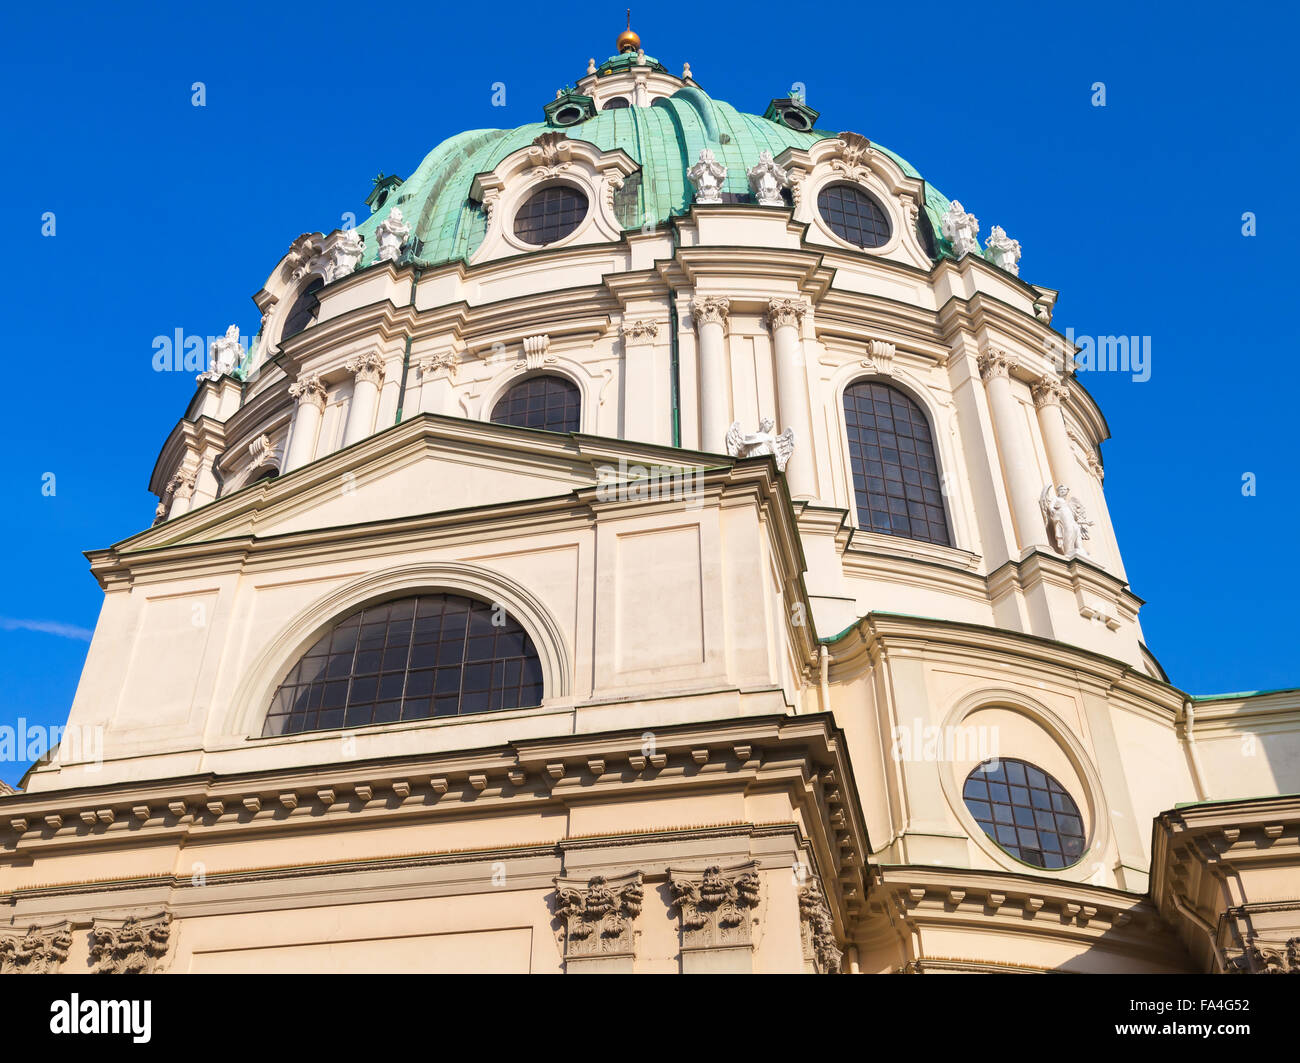 St. Charles Church in Vienna, Austria. Facade fragment Stock Photo